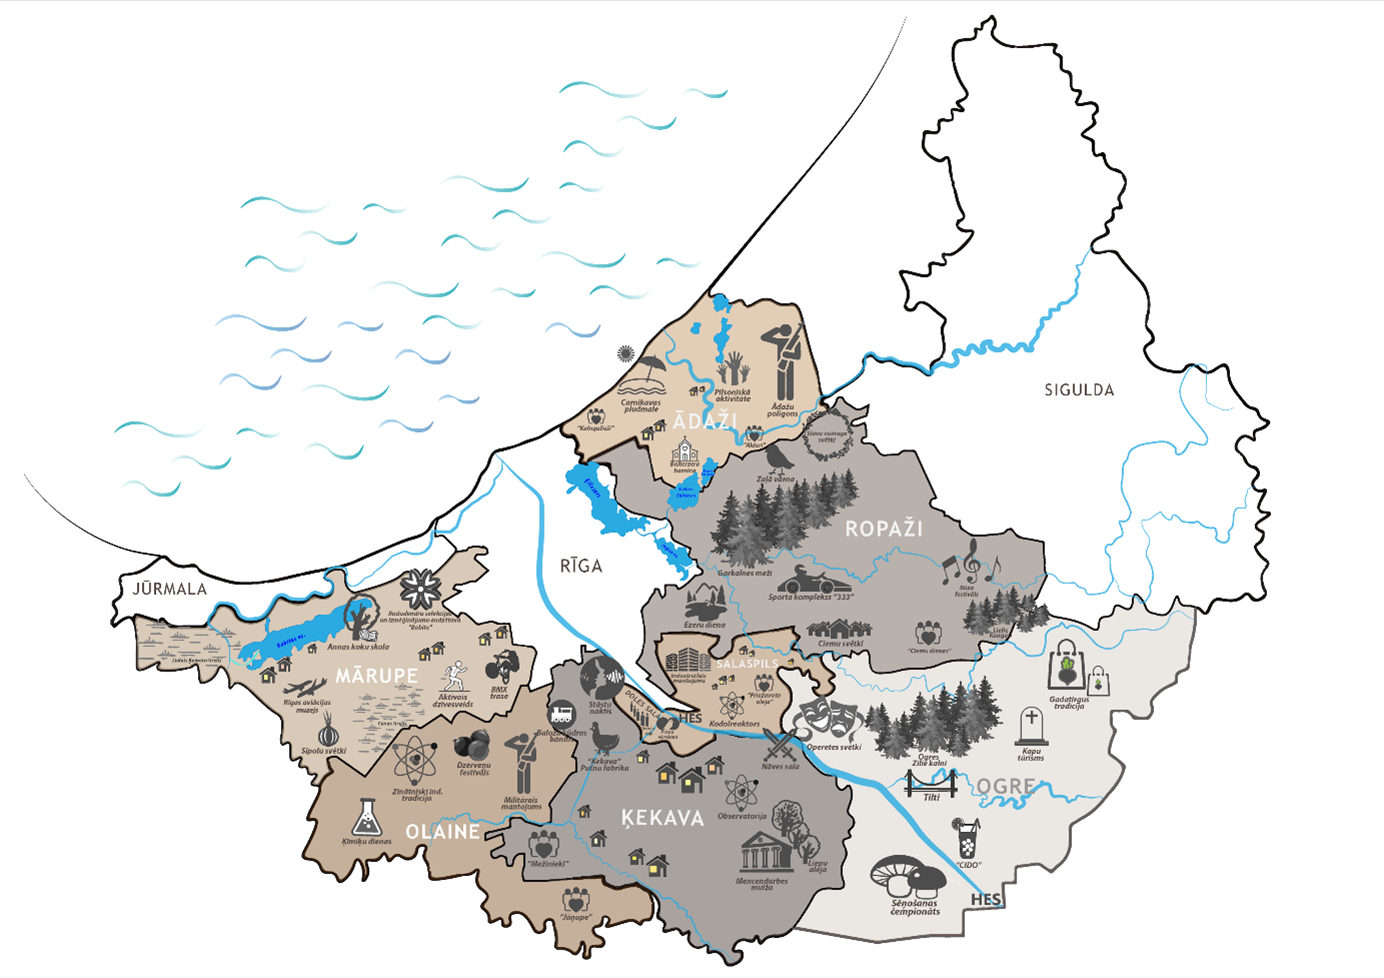 Riga planning region „Treasure hunting” 